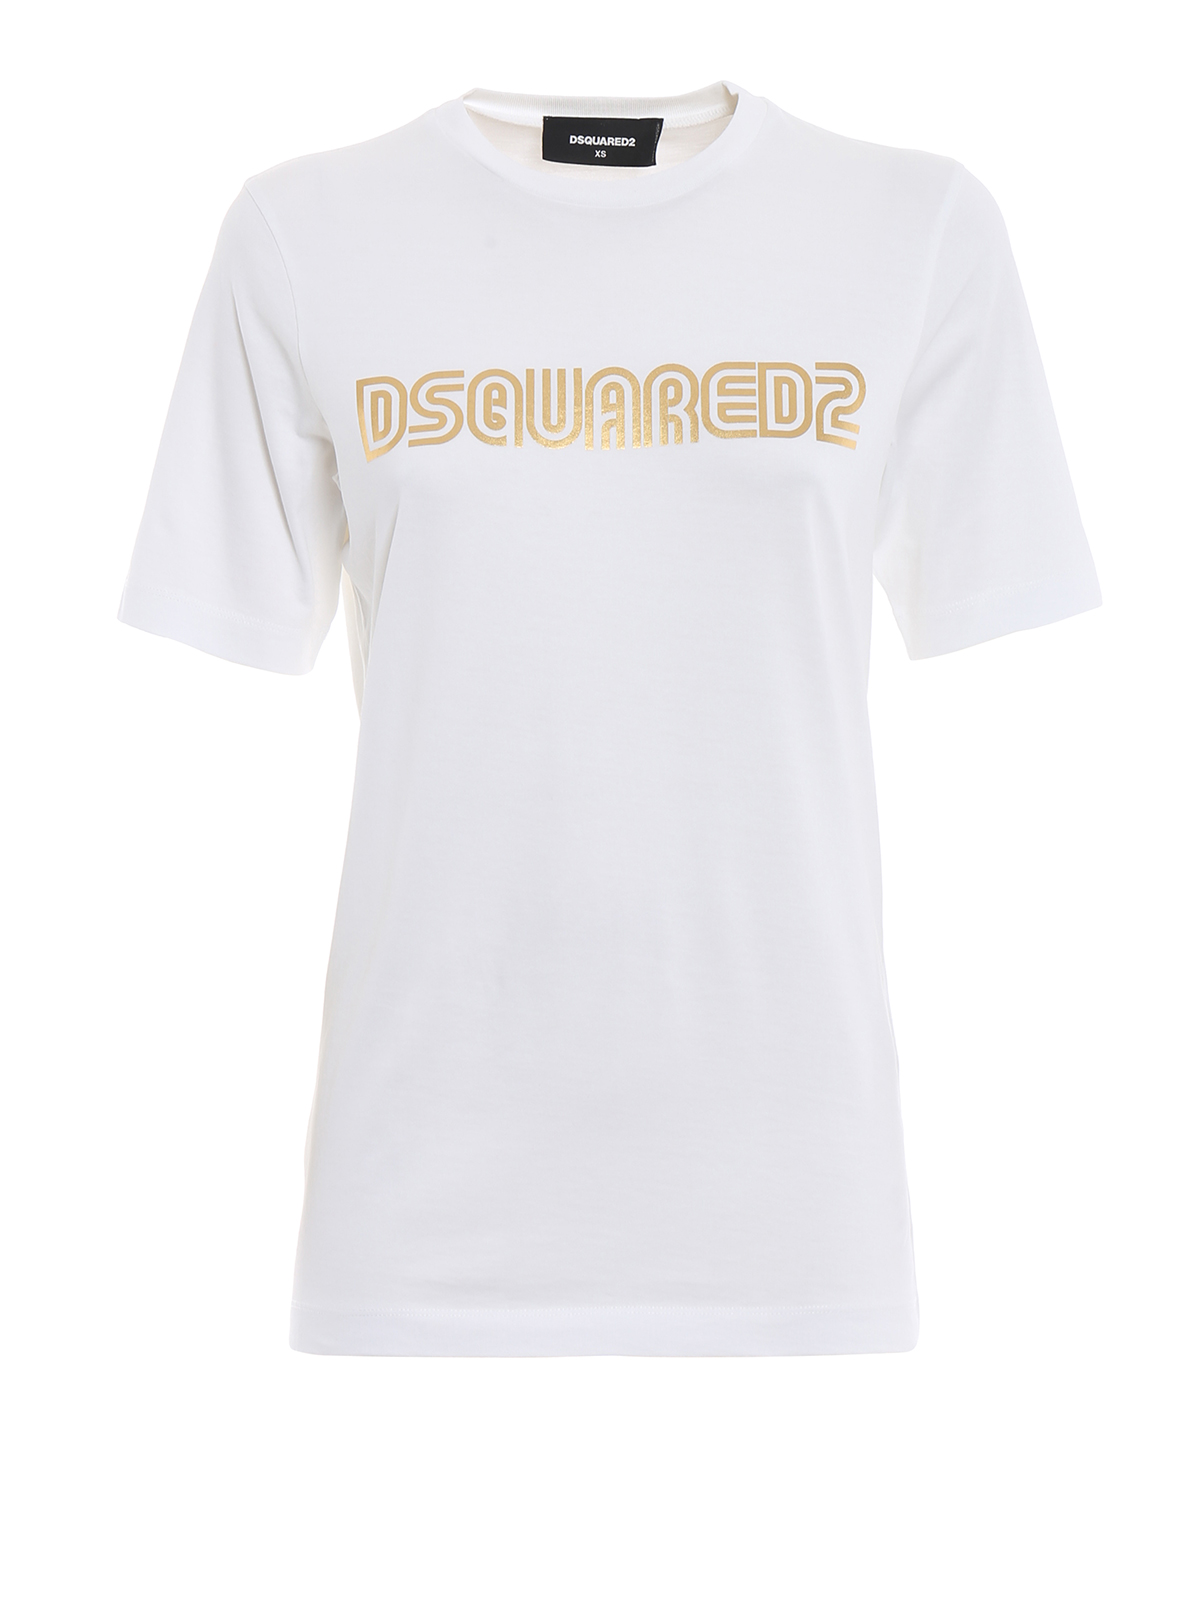 dsquared gold t shirt